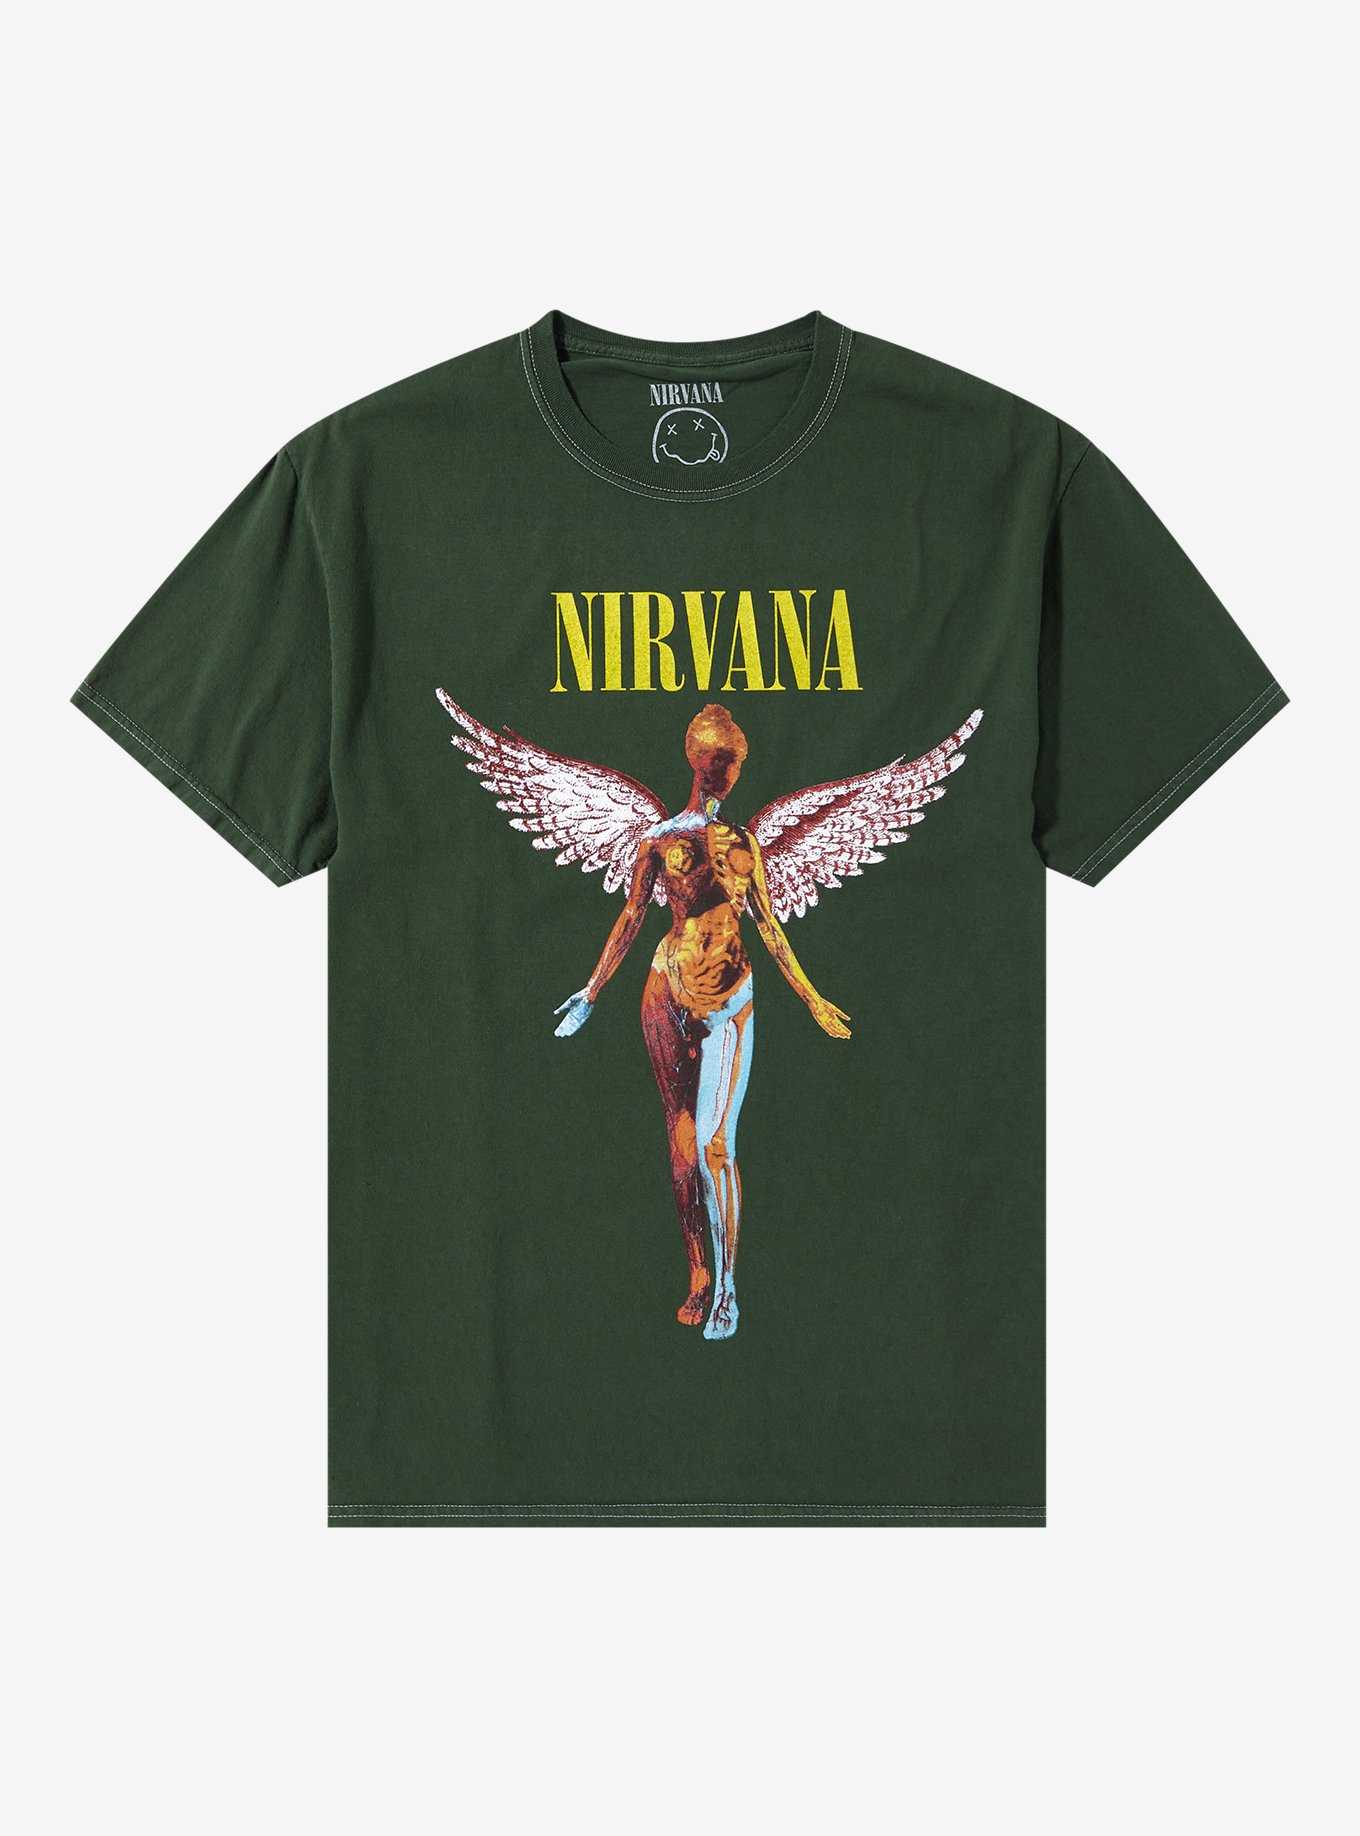 Nirvana In Utero Angel Green Girls T-Shirt, , hi-res